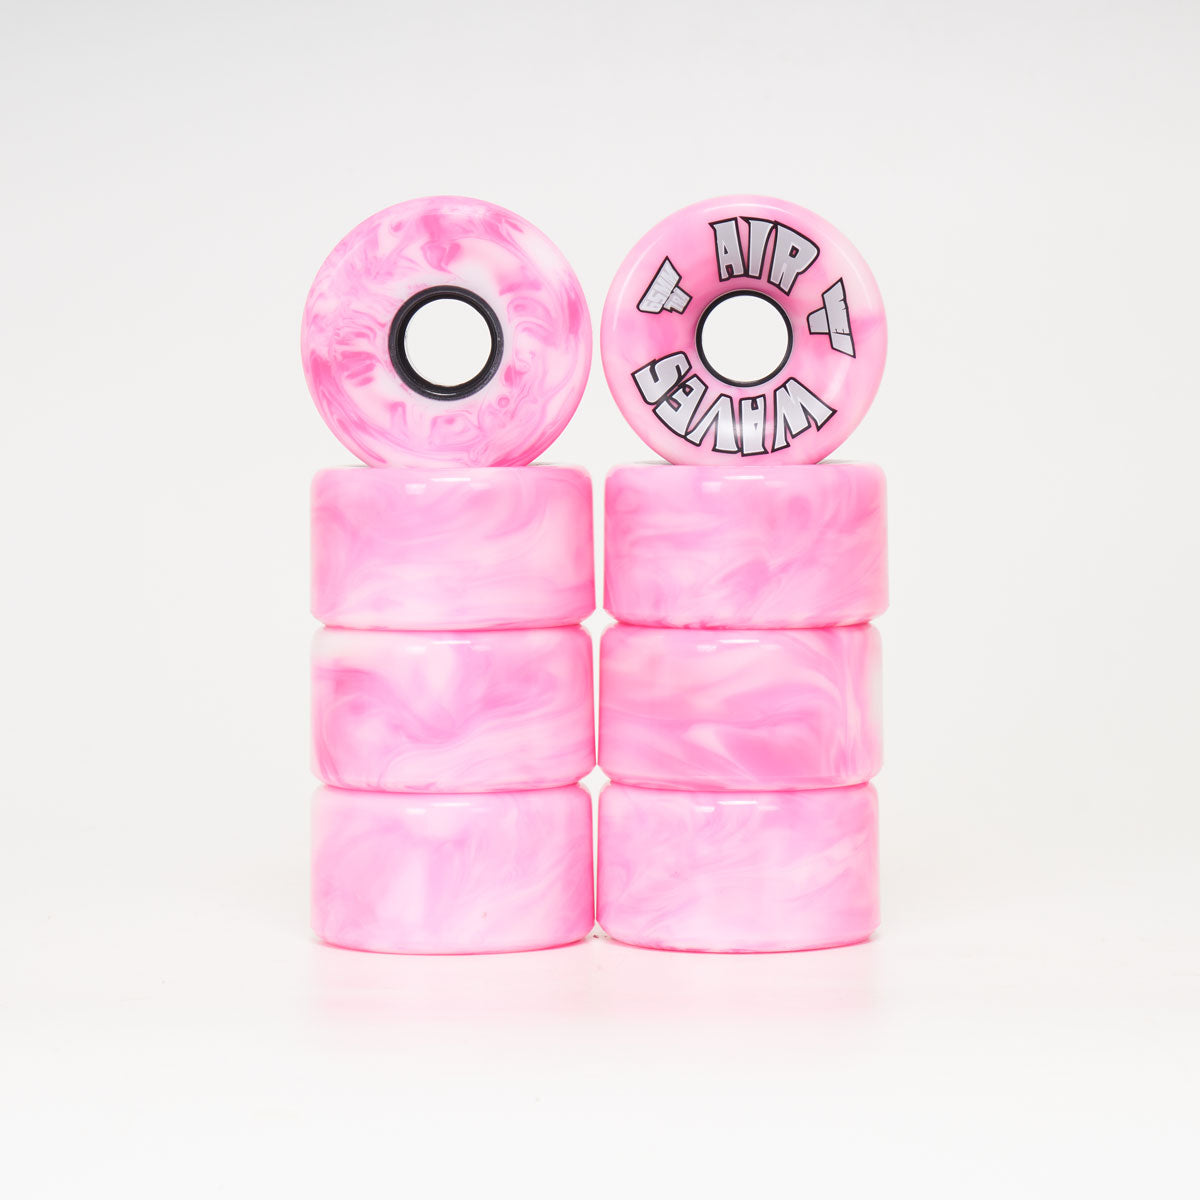 Airwaves 65mm/78a Wheels - Pink/White Marble